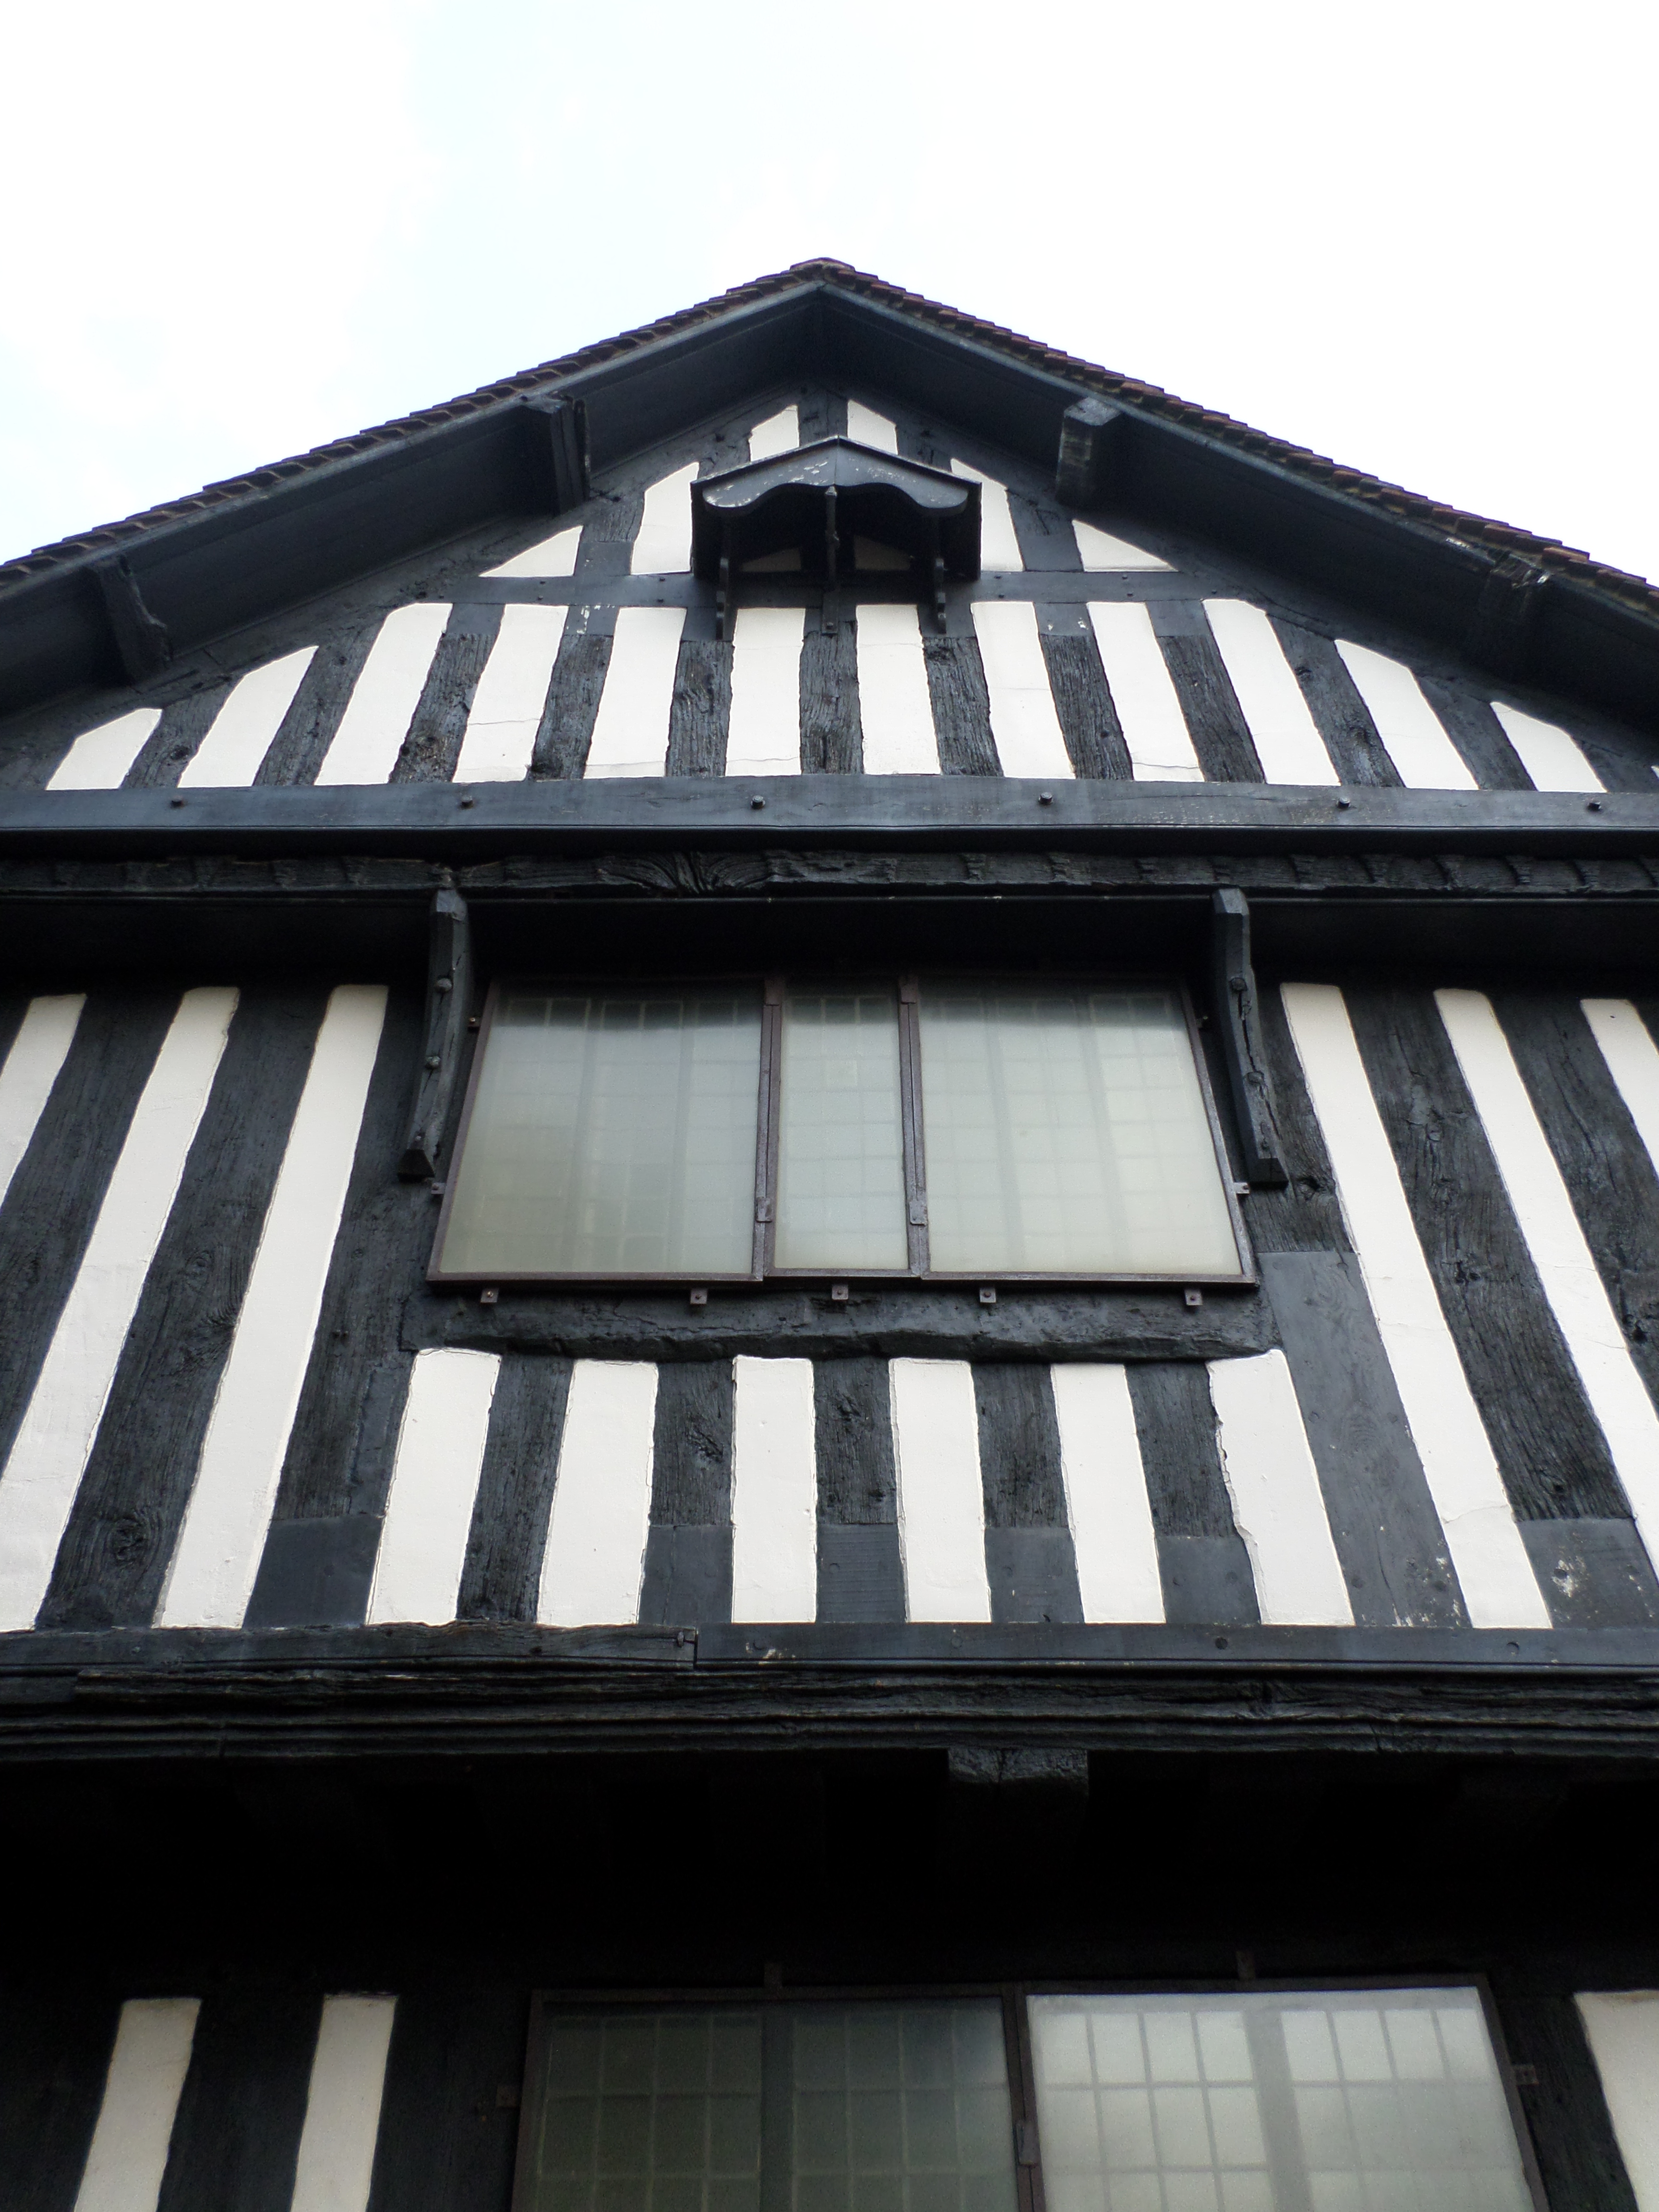 Tudor building, Architecture, Beams, Birmingham, Grade2listed, HQ Photo